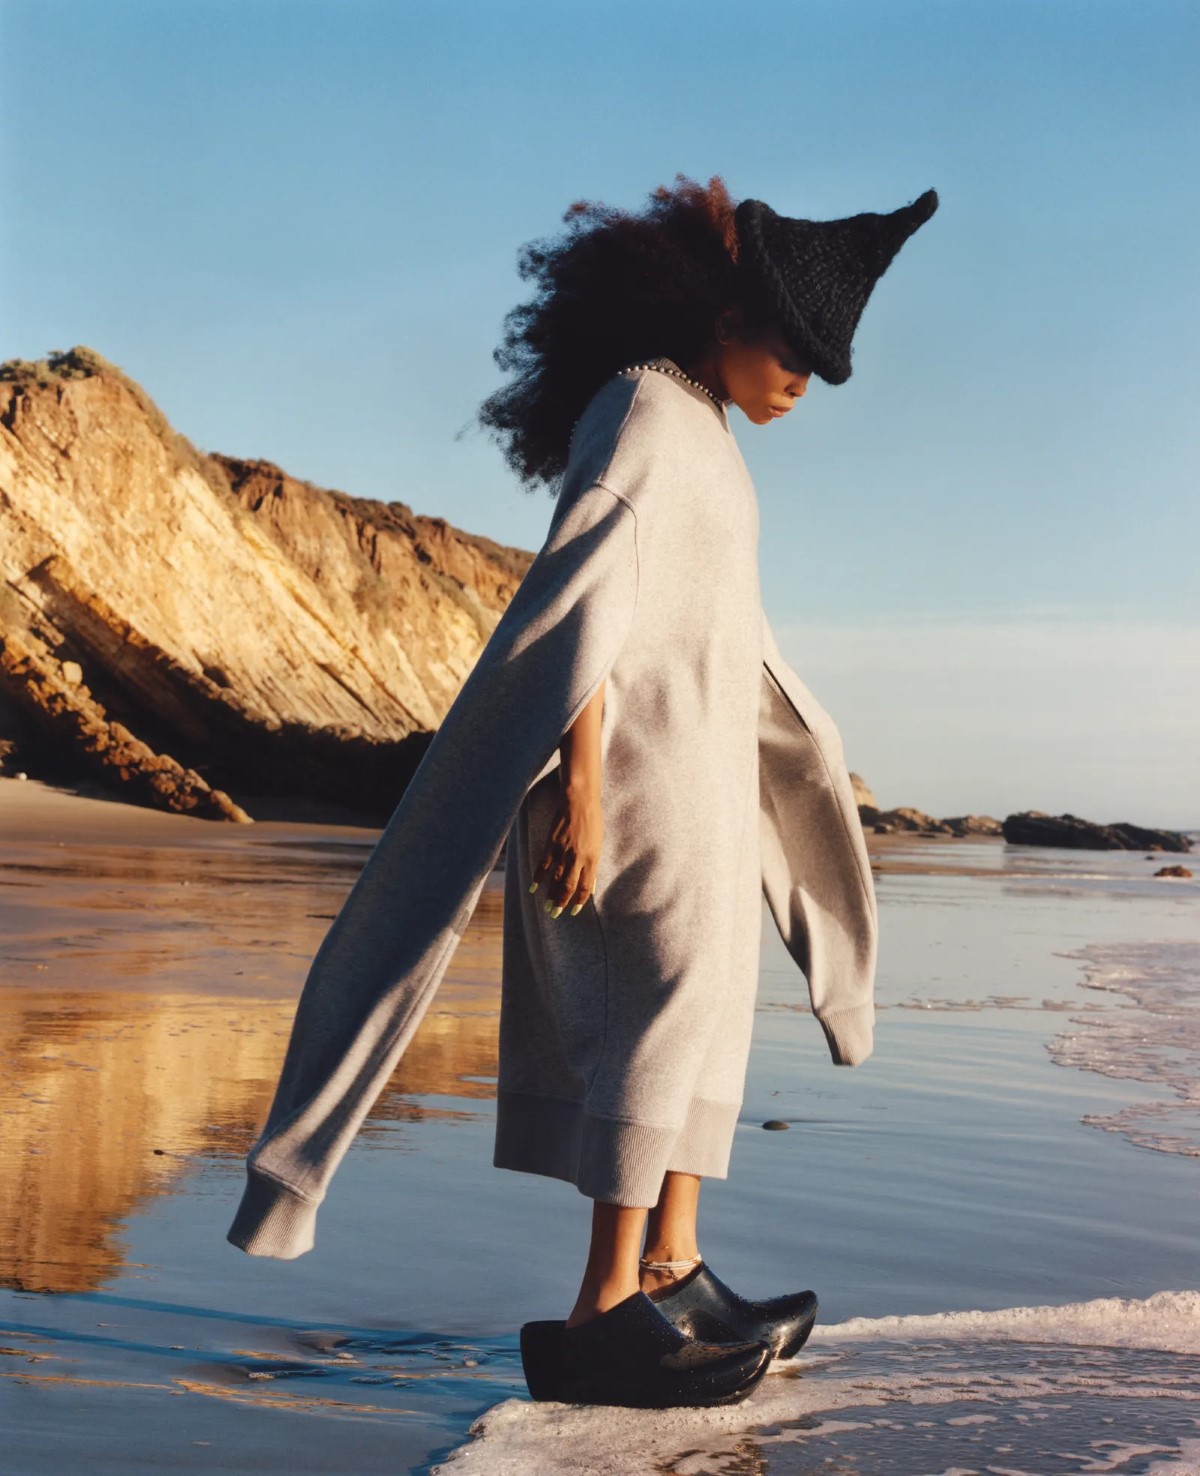 Erykah Badu covers Vogue US March 2023 by Jamie Hawkesworth